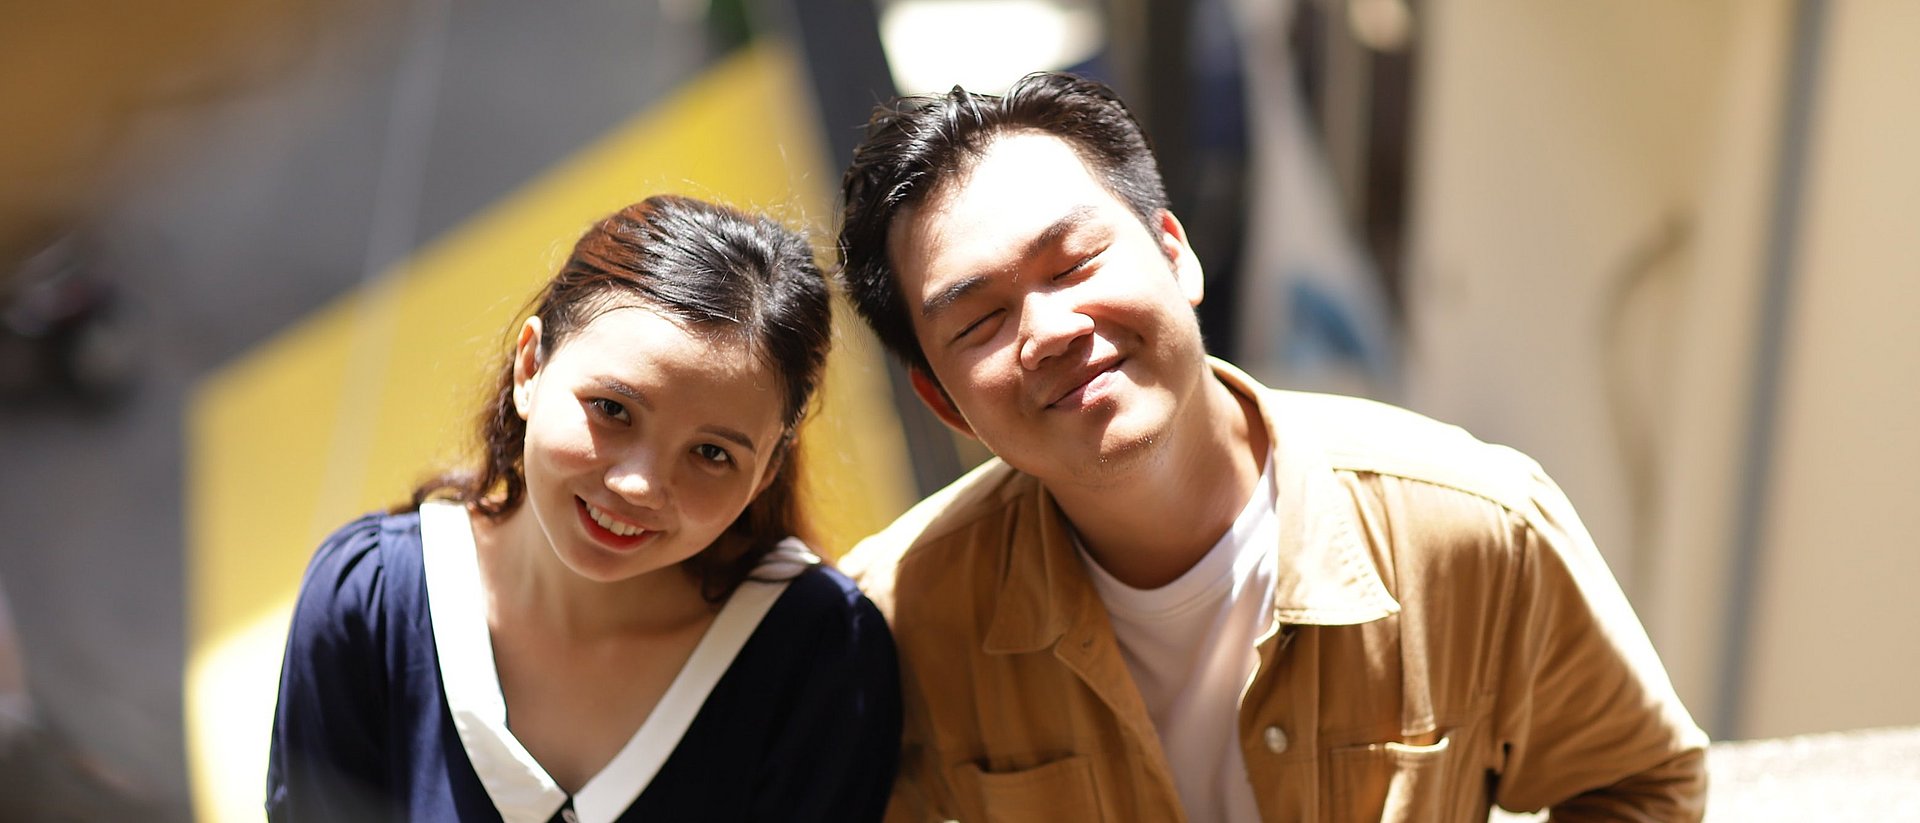 Zwei asiatischstämmige Studierende lächeln den Betrachter an.